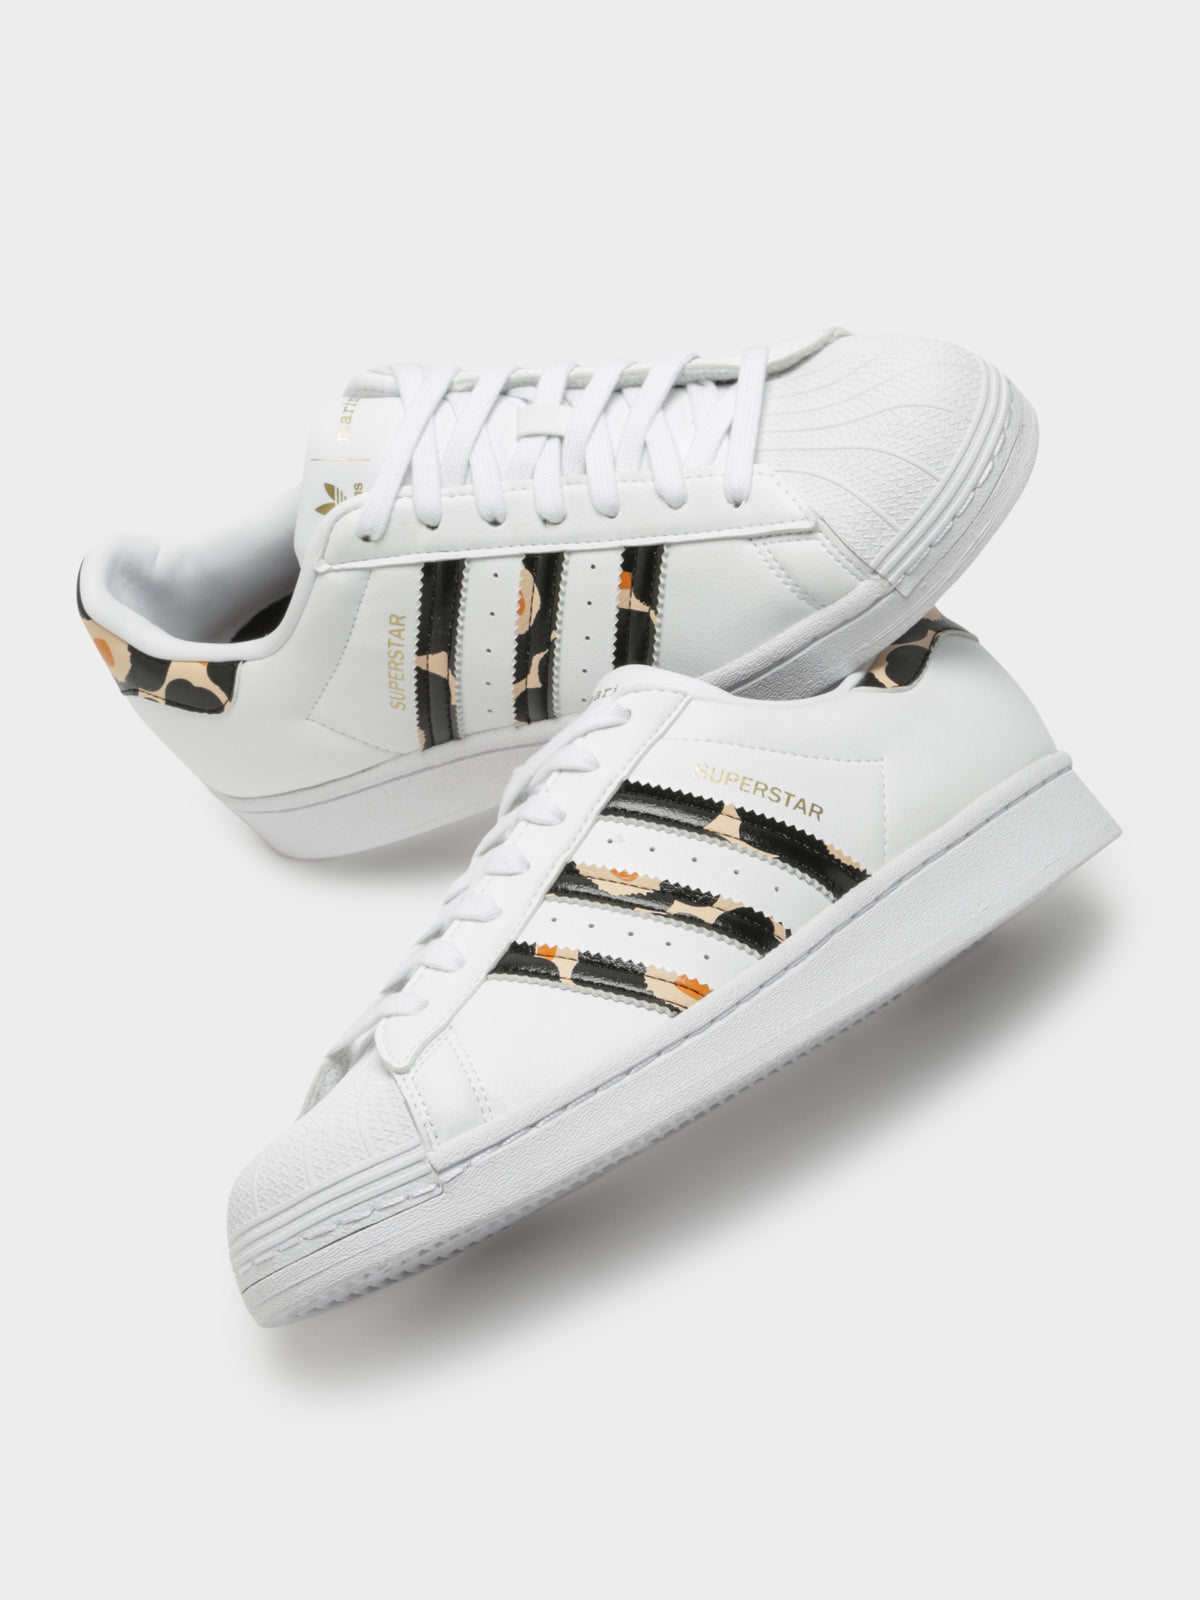 Womens Marimekko x Superstar Sneakers in White, Black &amp; Gold